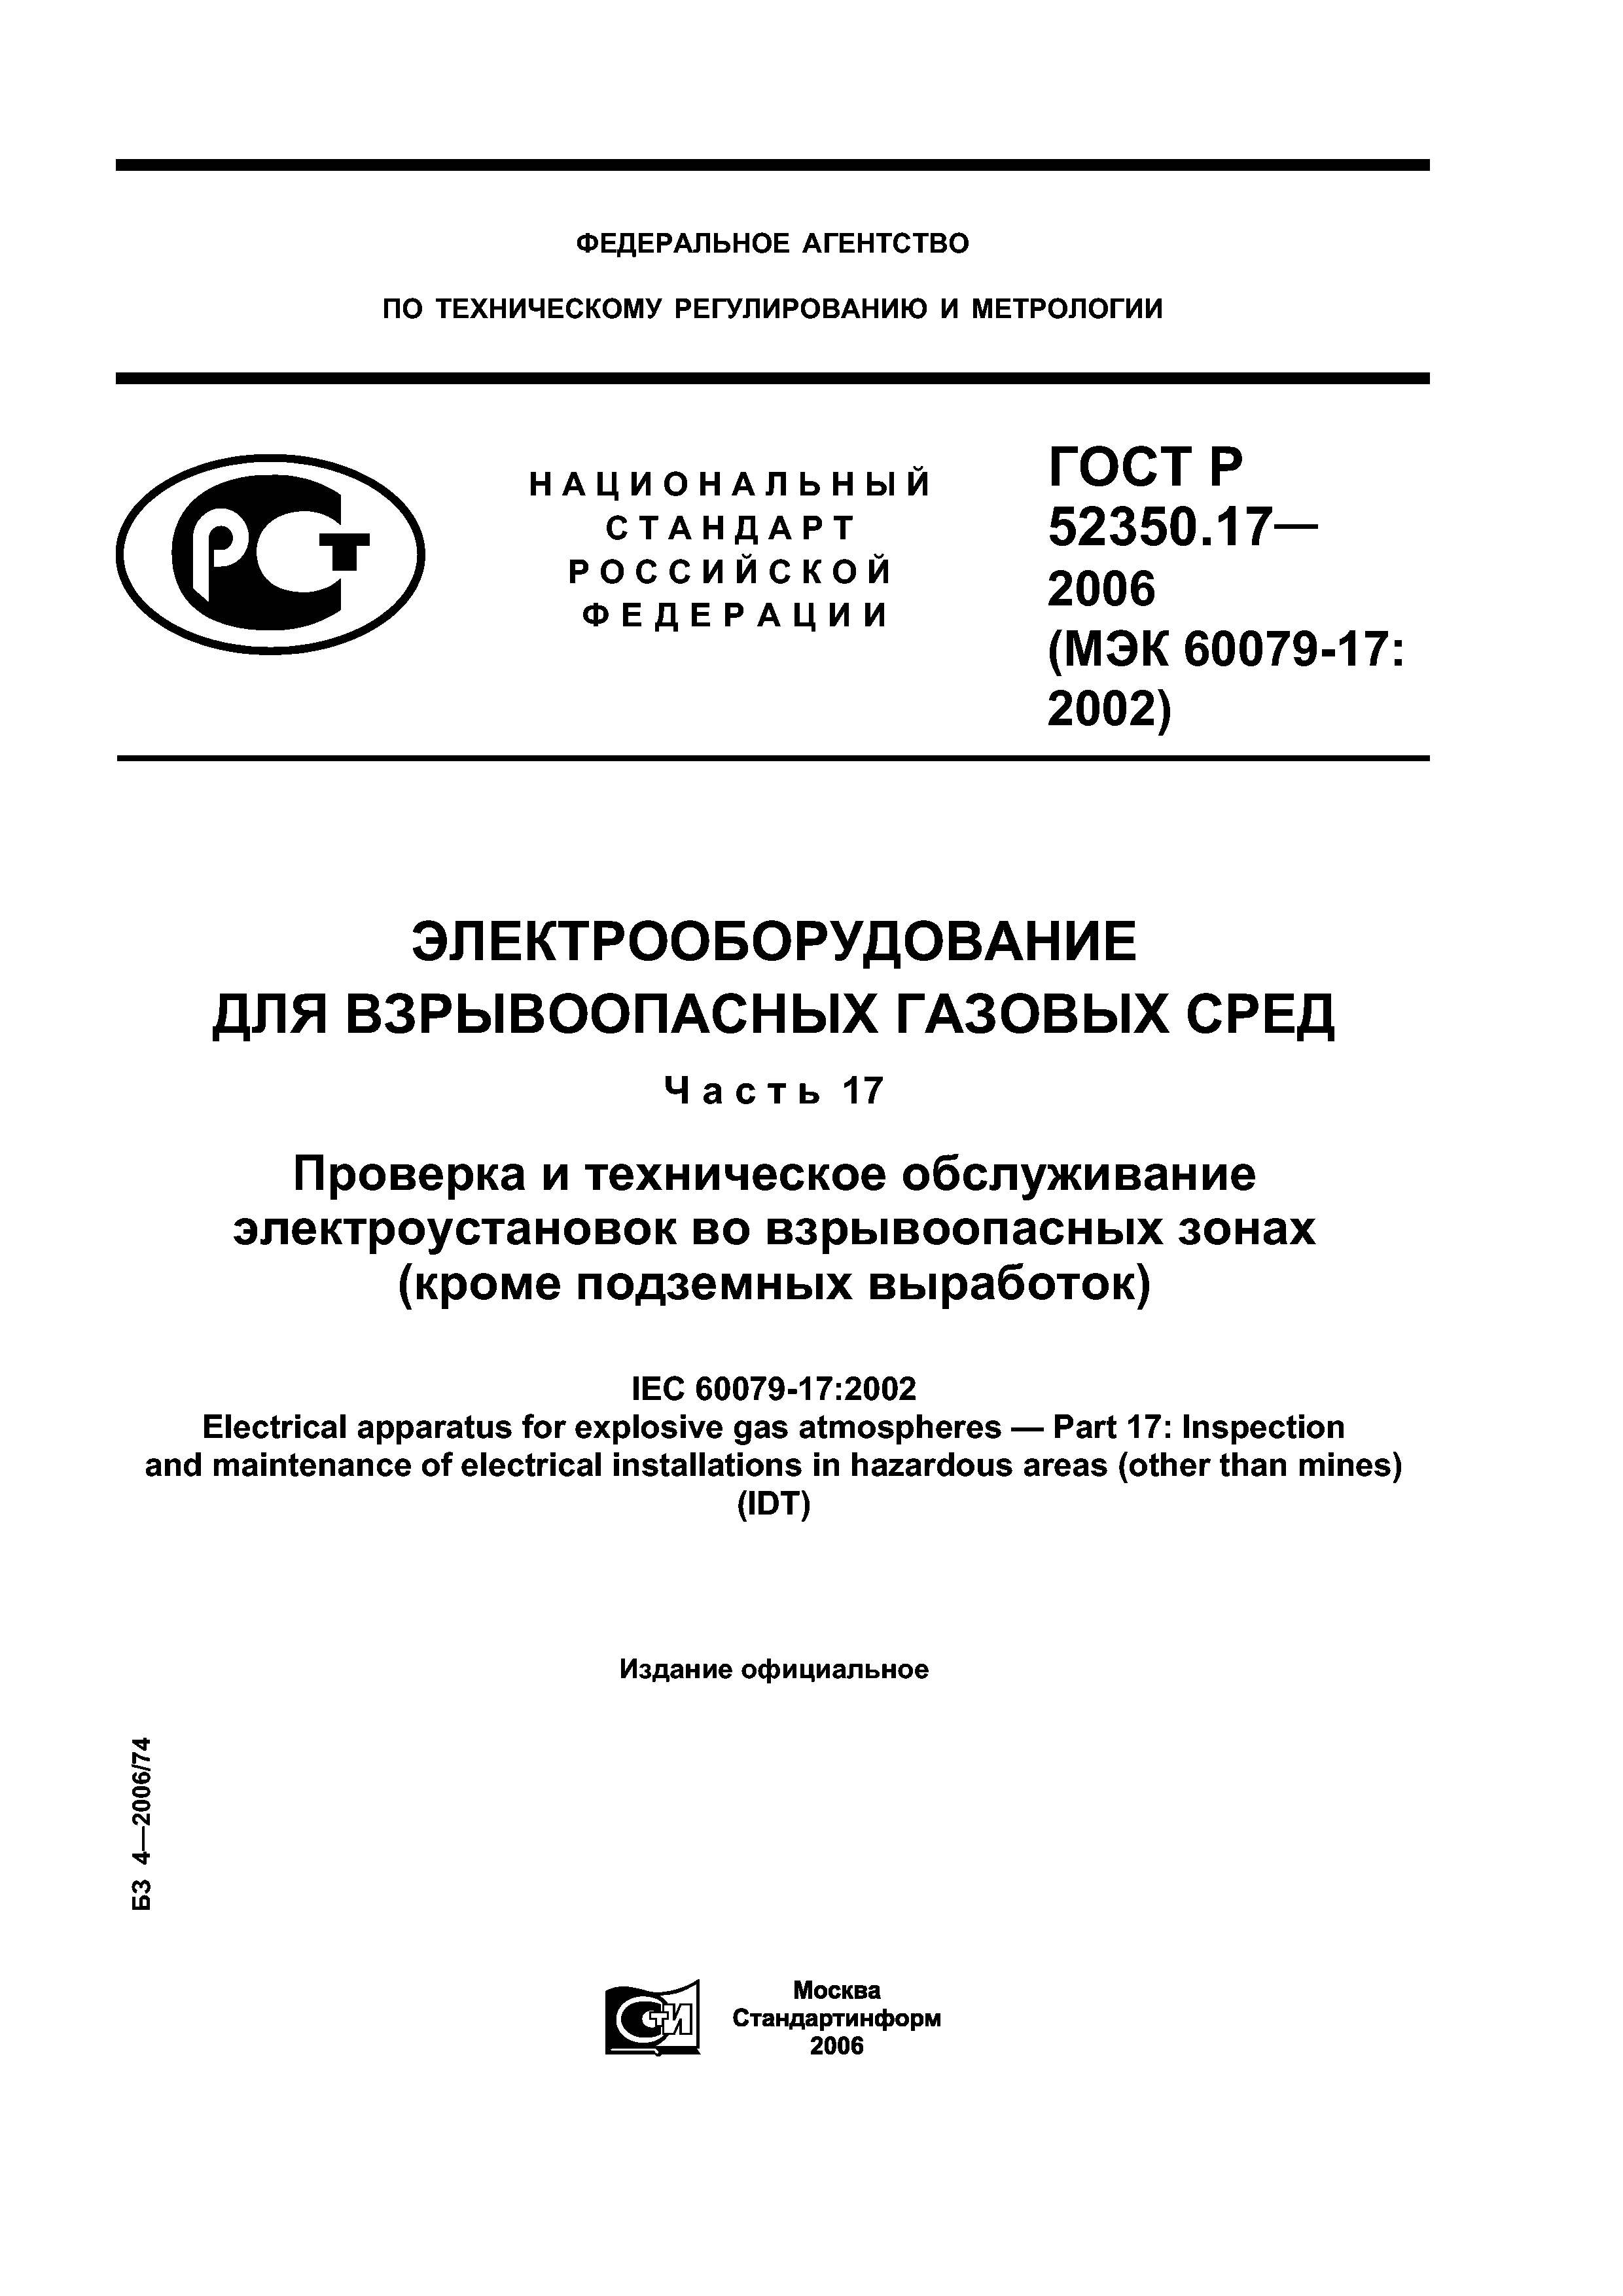 ГОСТ Р 52350.17-2006